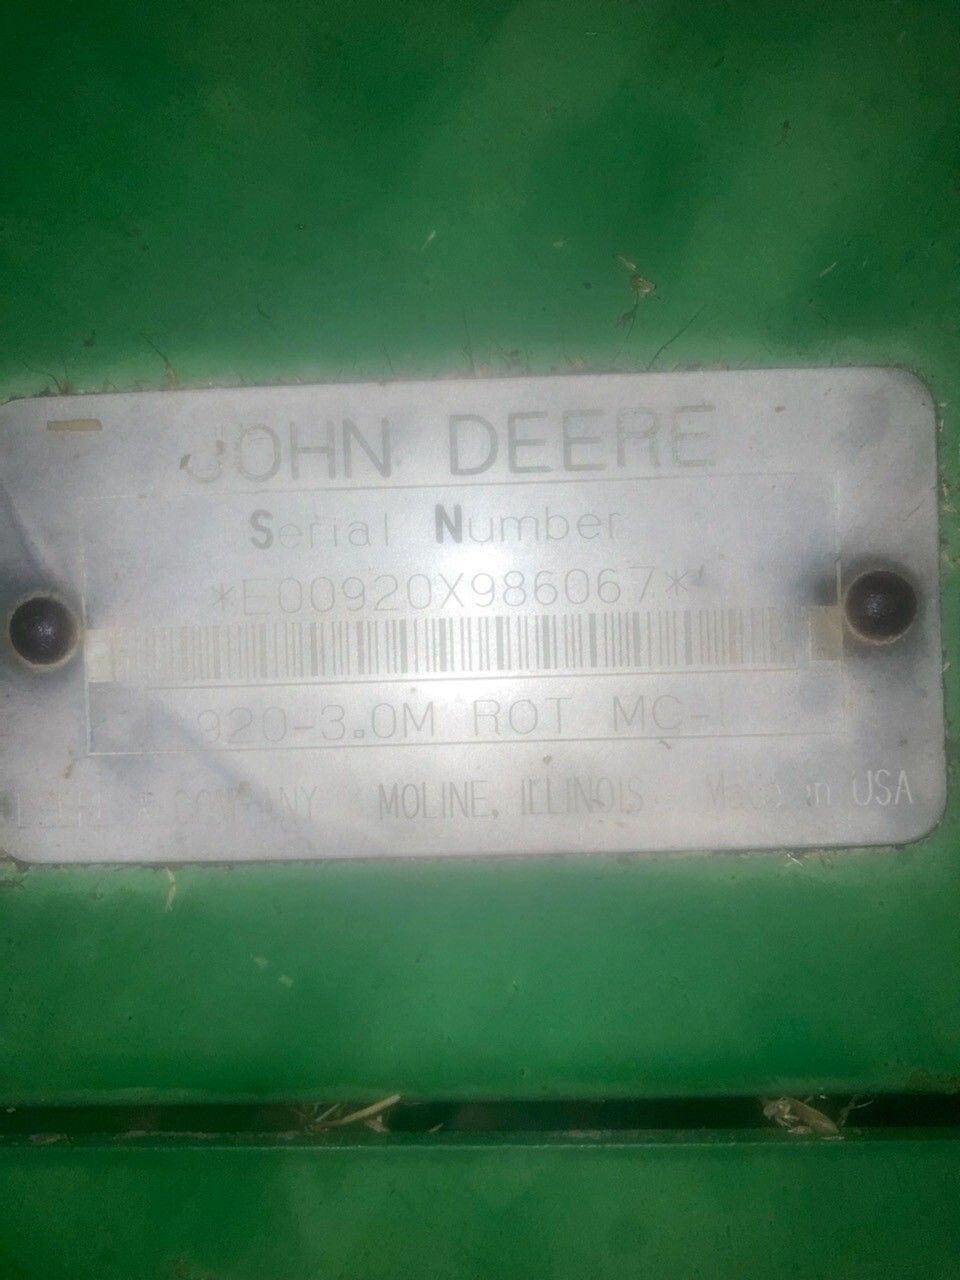 1994 John Deere 920